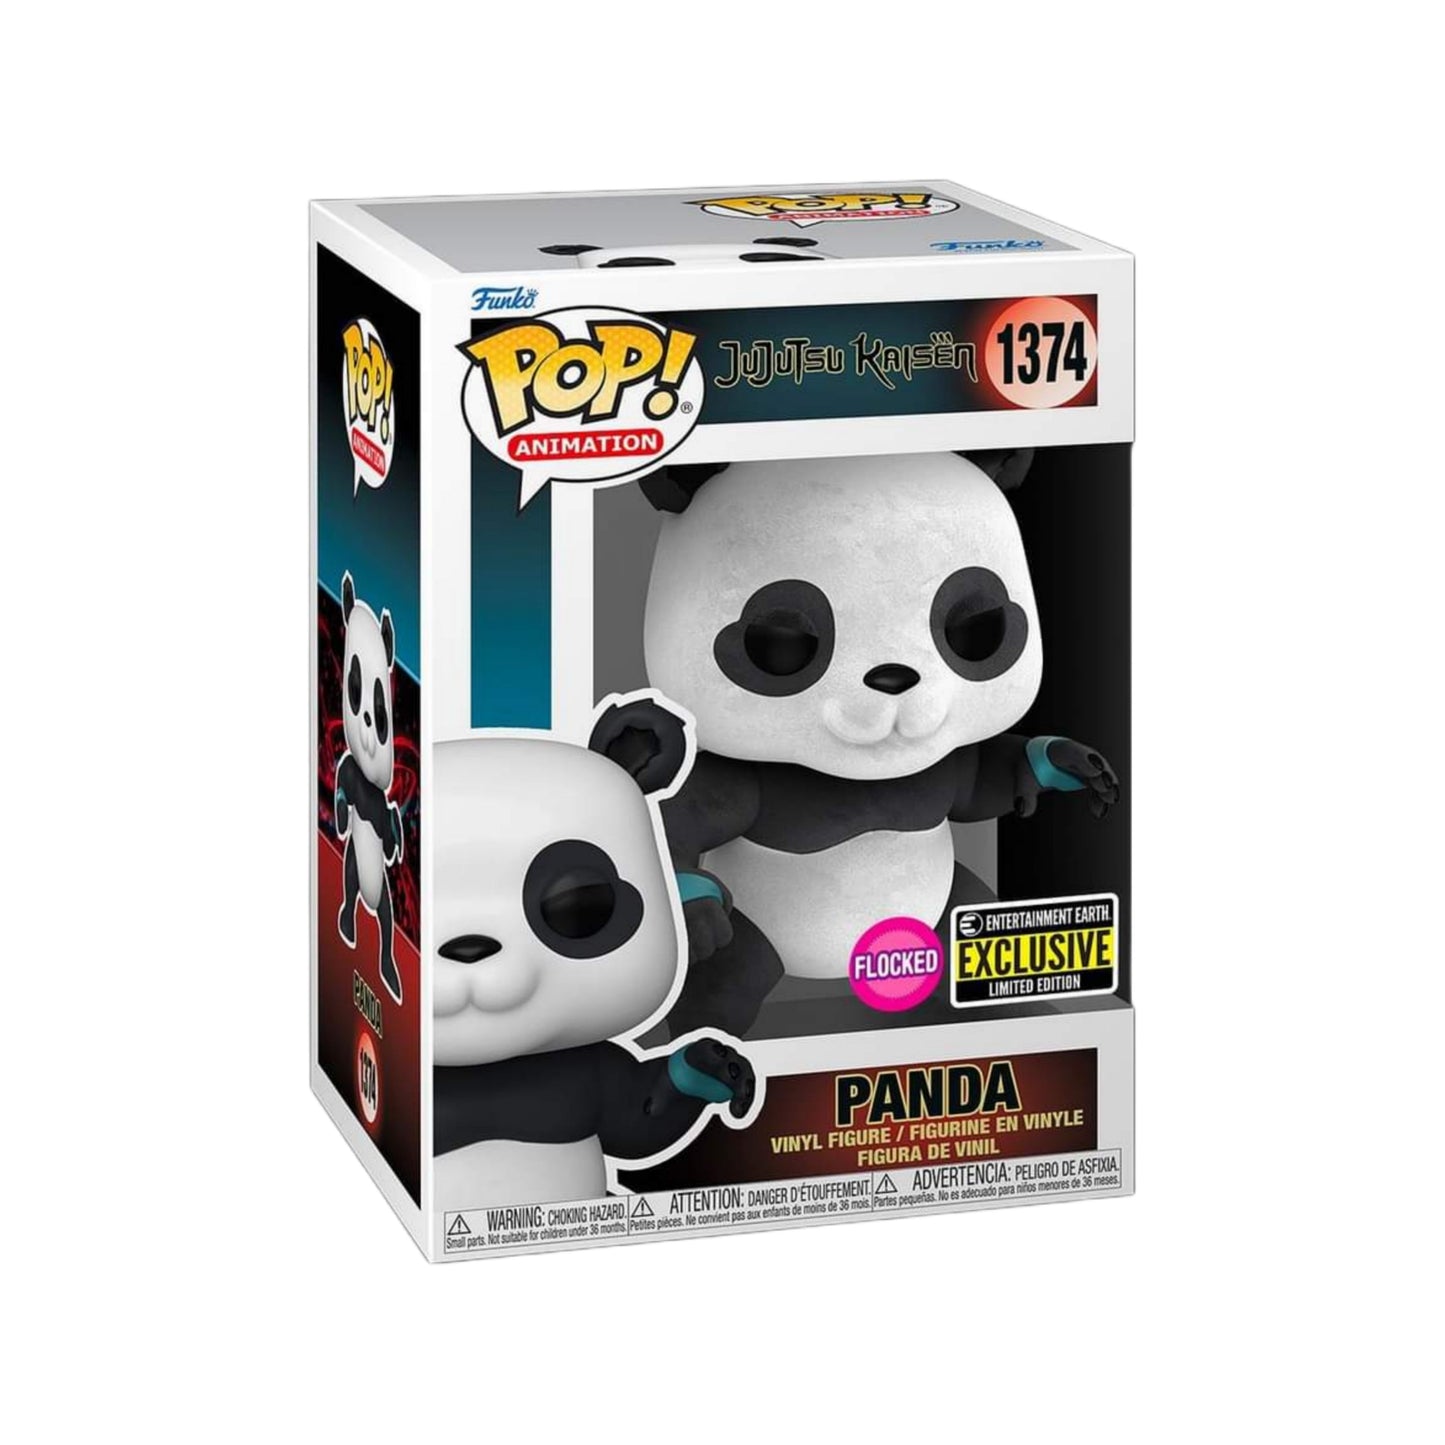 On Hand Panda Flocked EE Exclusive Funko Pop!